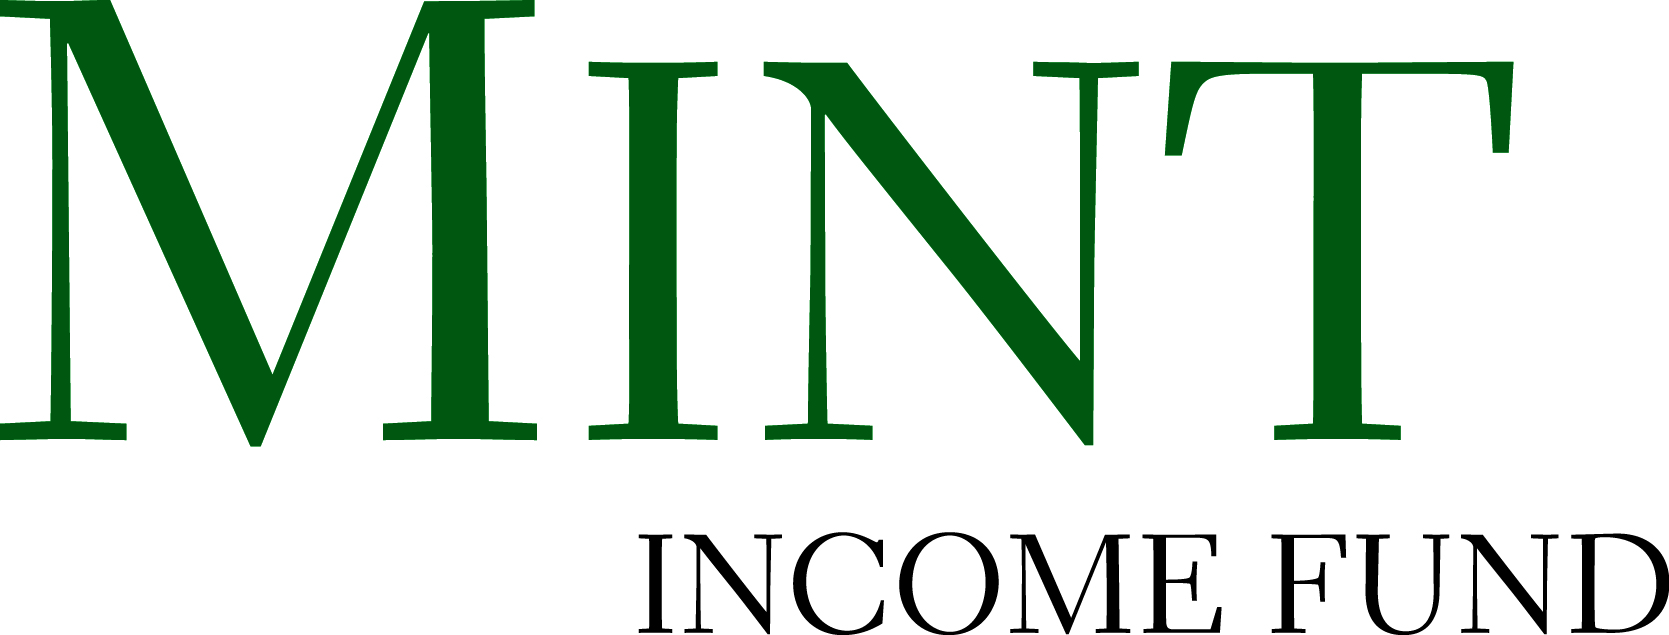 Mint Logo.jpg